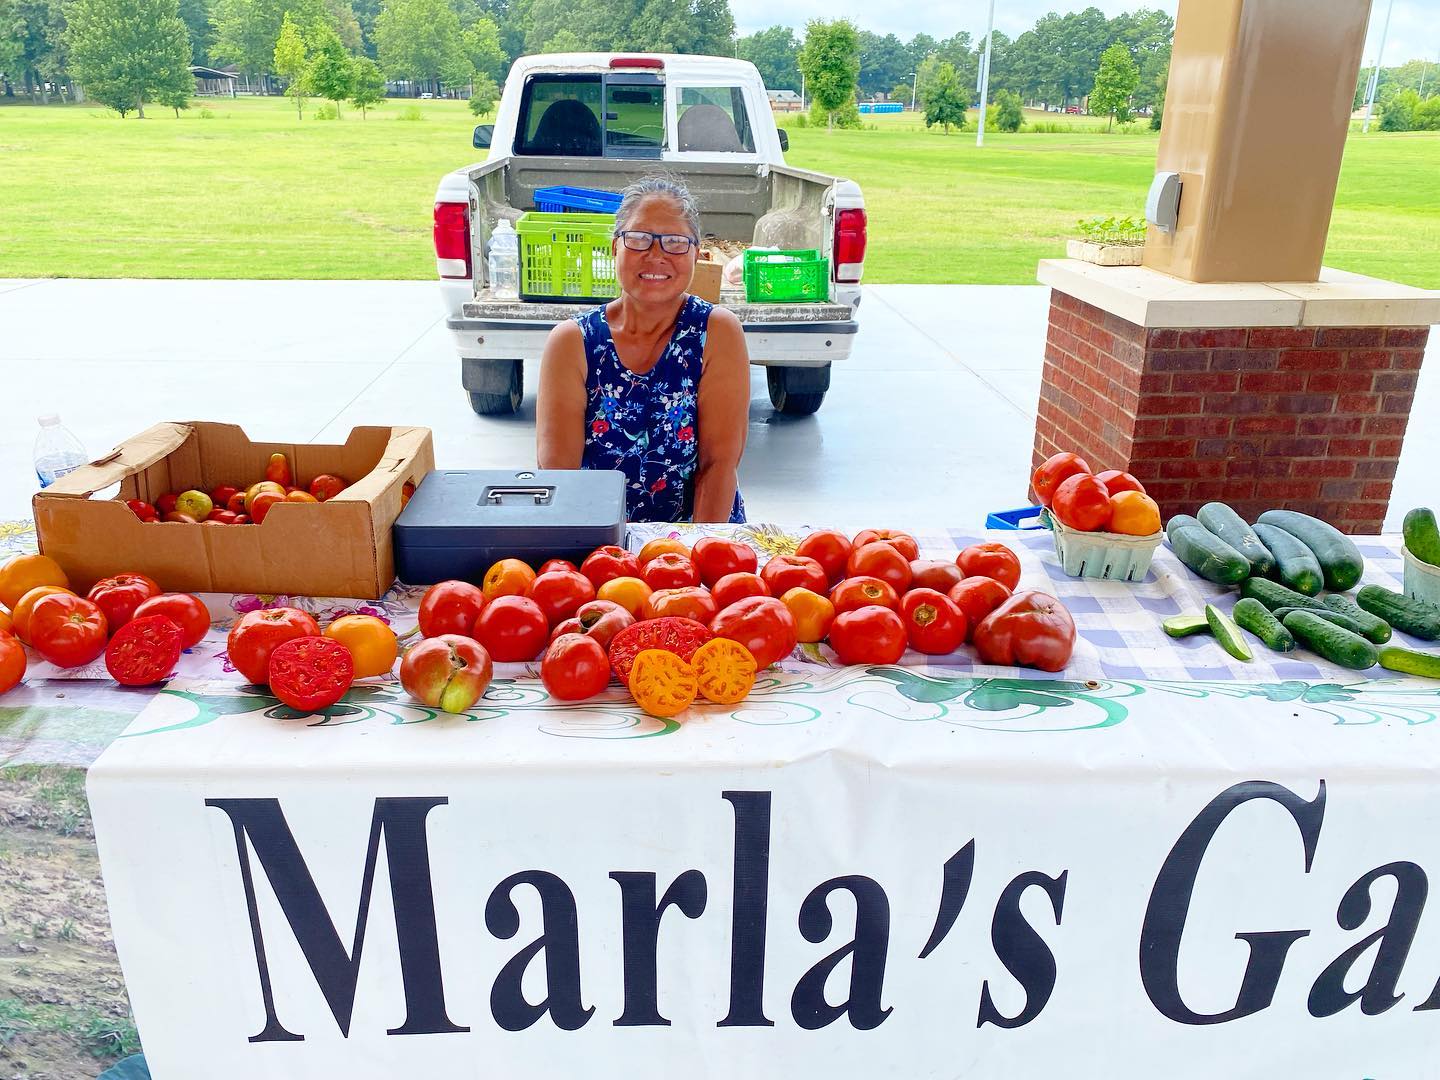 Marla's farmers market produce stand.